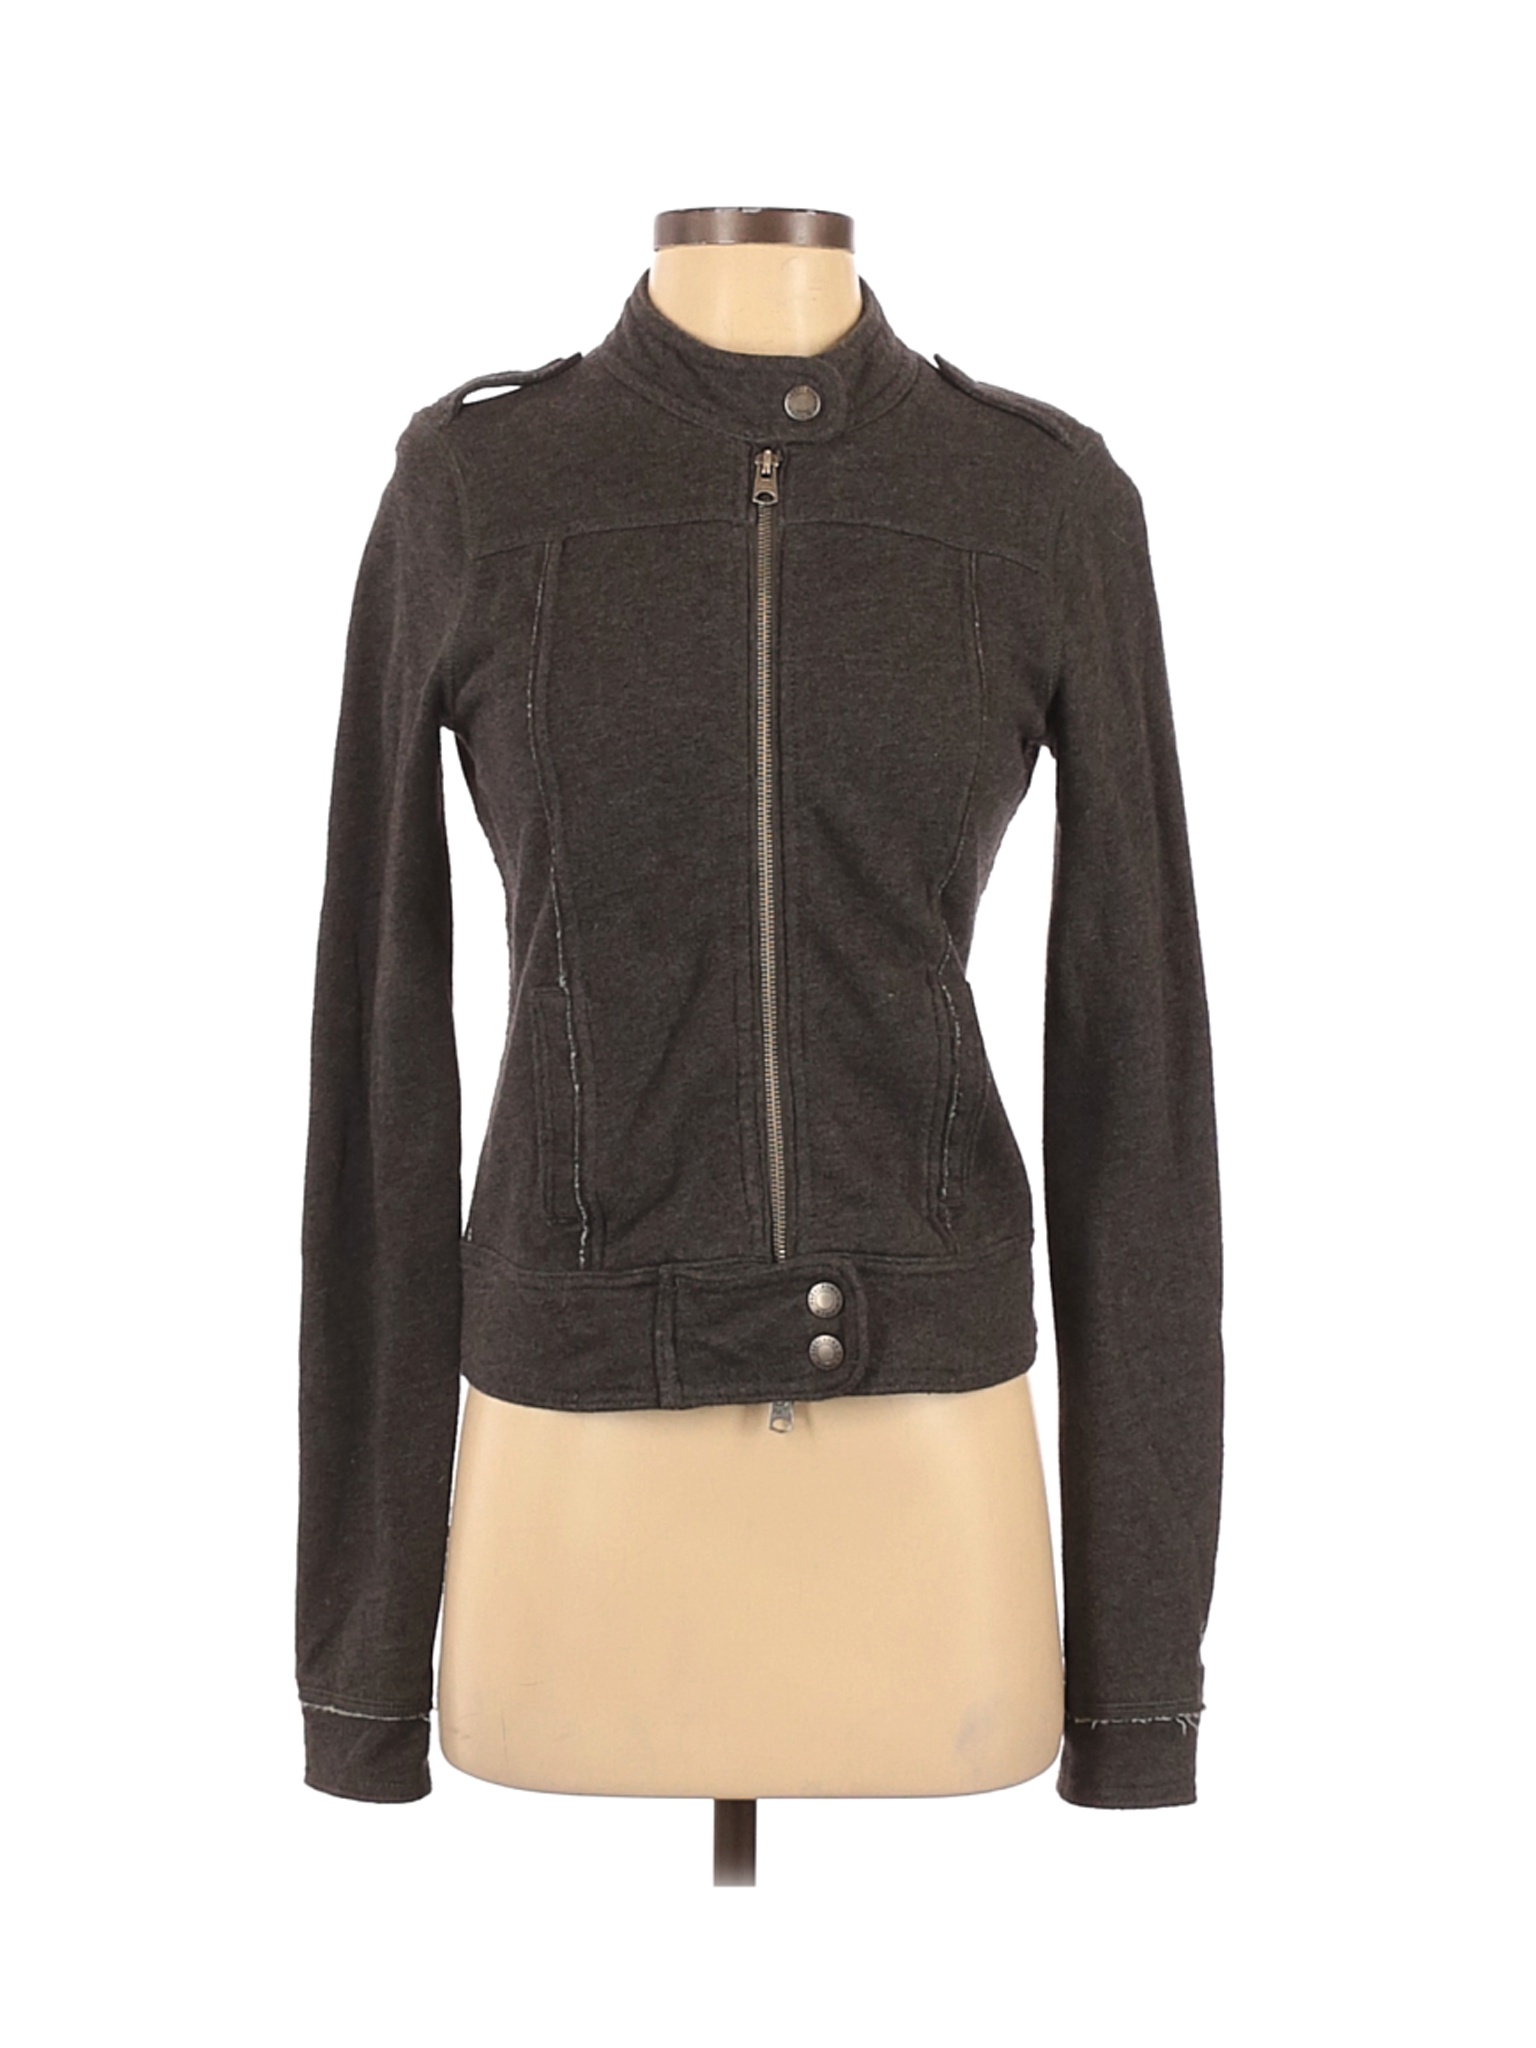 Abercrombie & Fitch Women Gray Jacket S | eBay